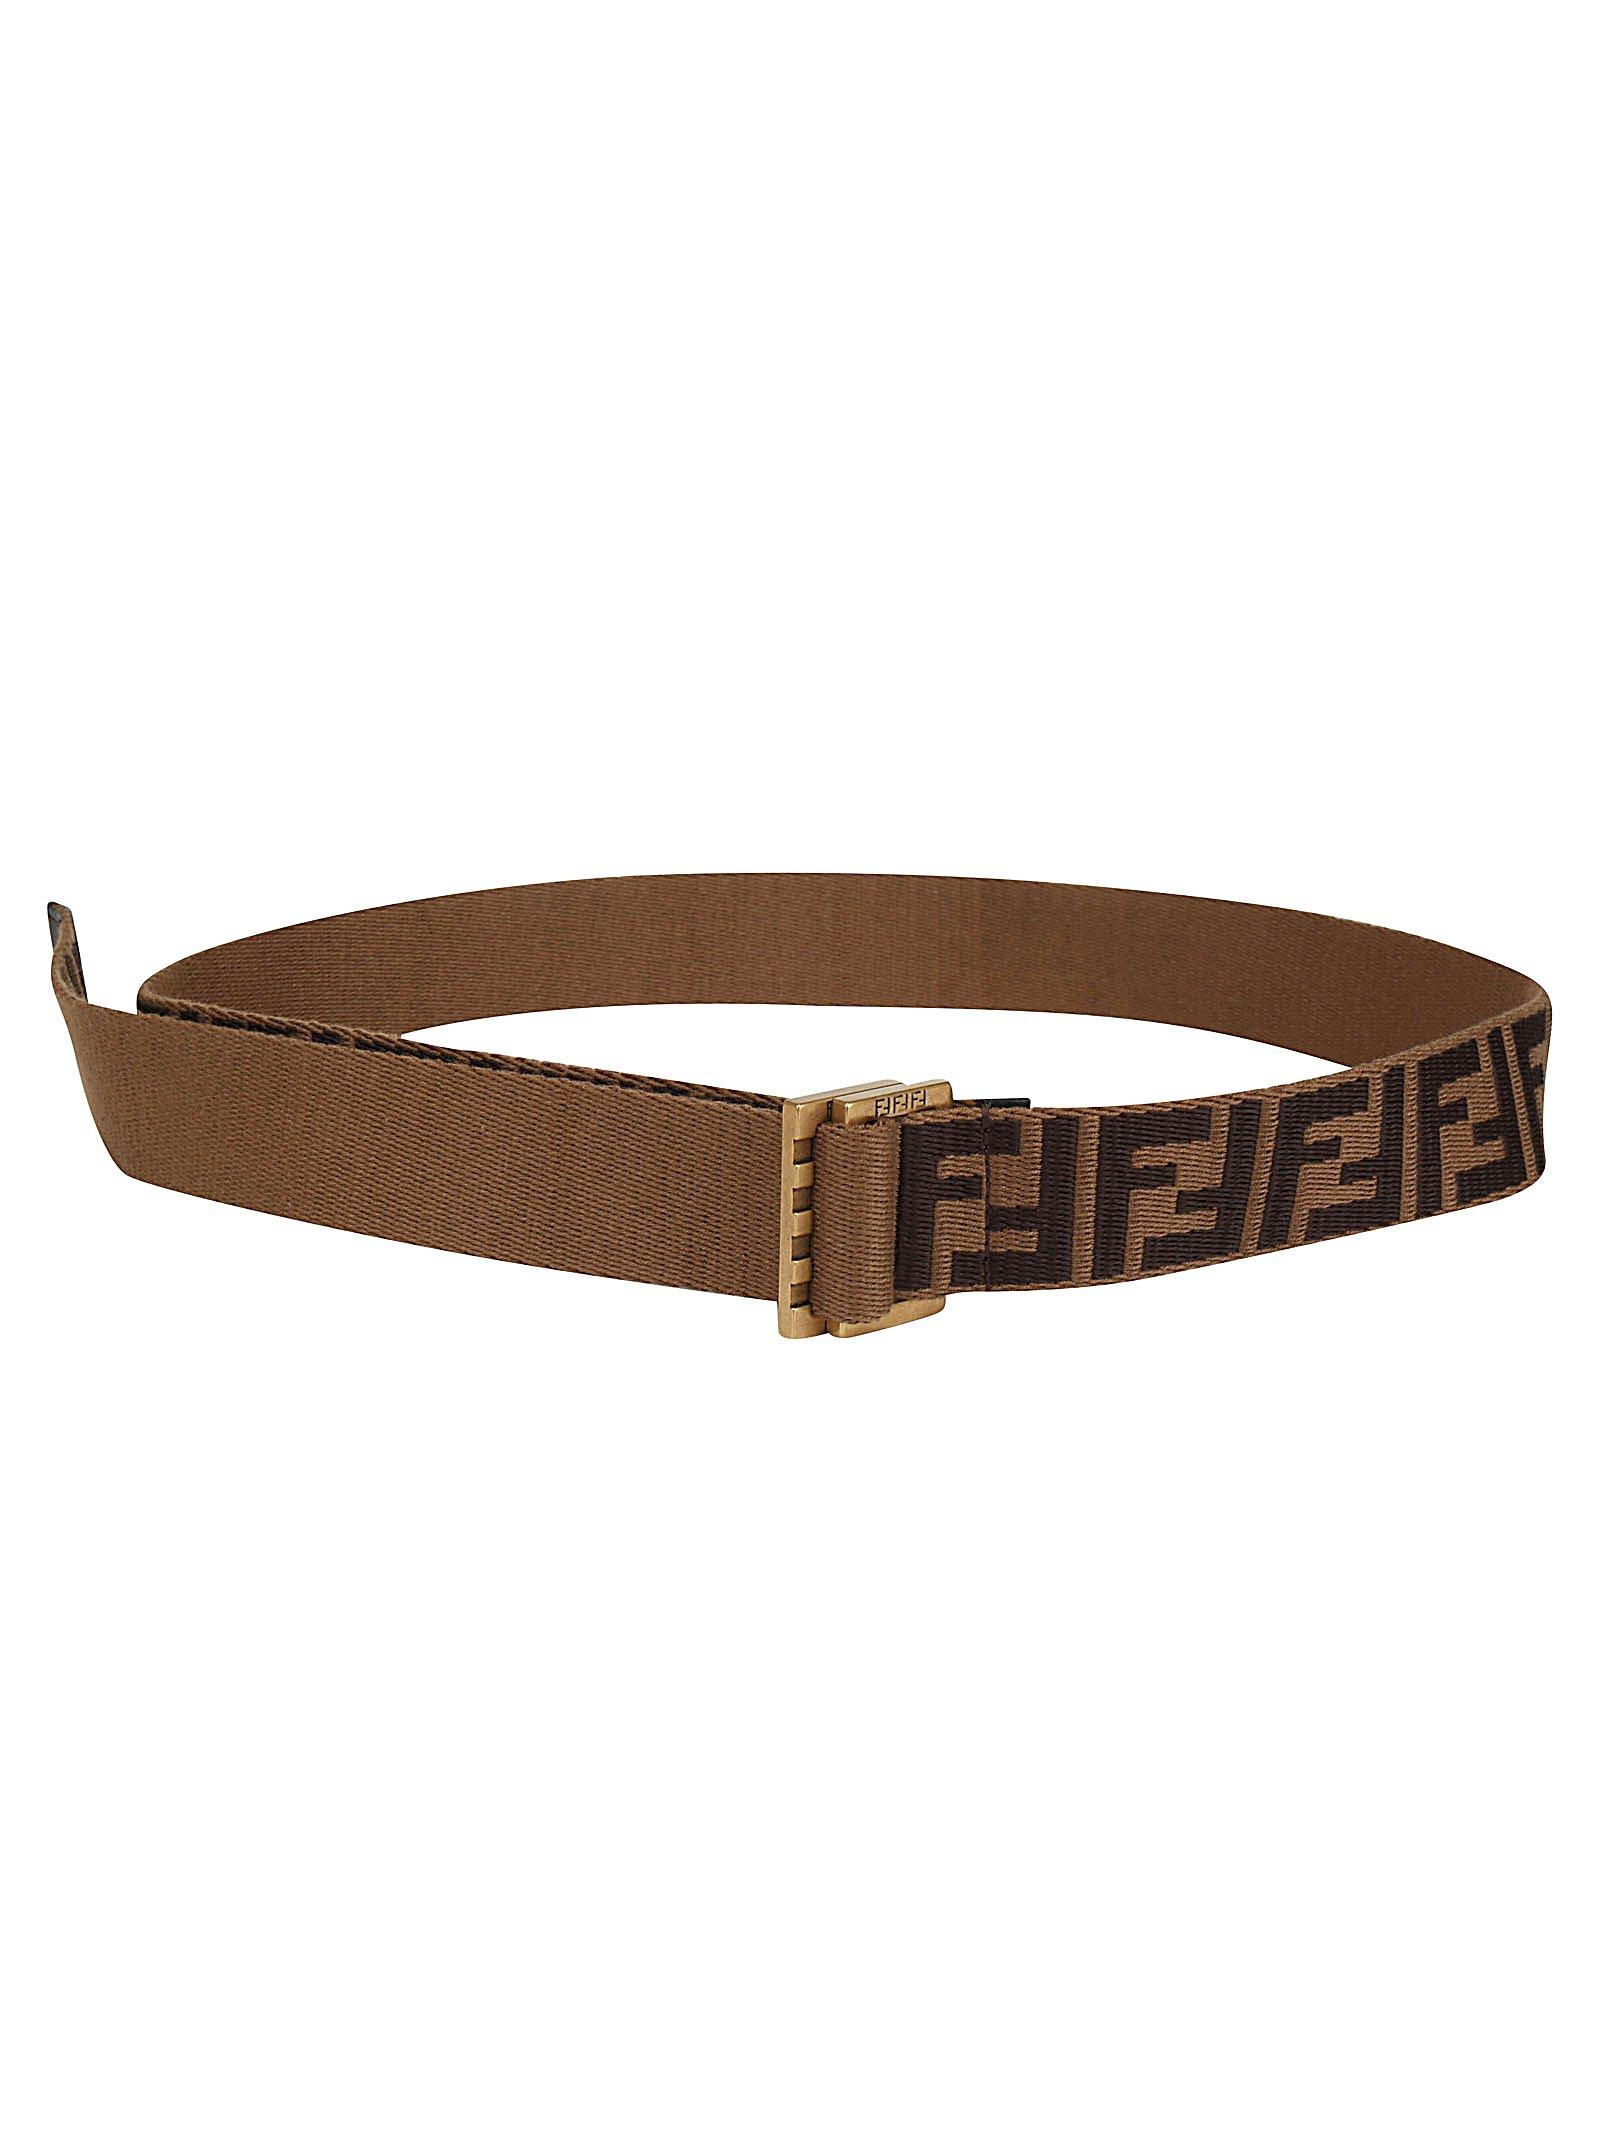 Fendi Leather Ff Logo Buckle Belt in Brown for Men - Lyst